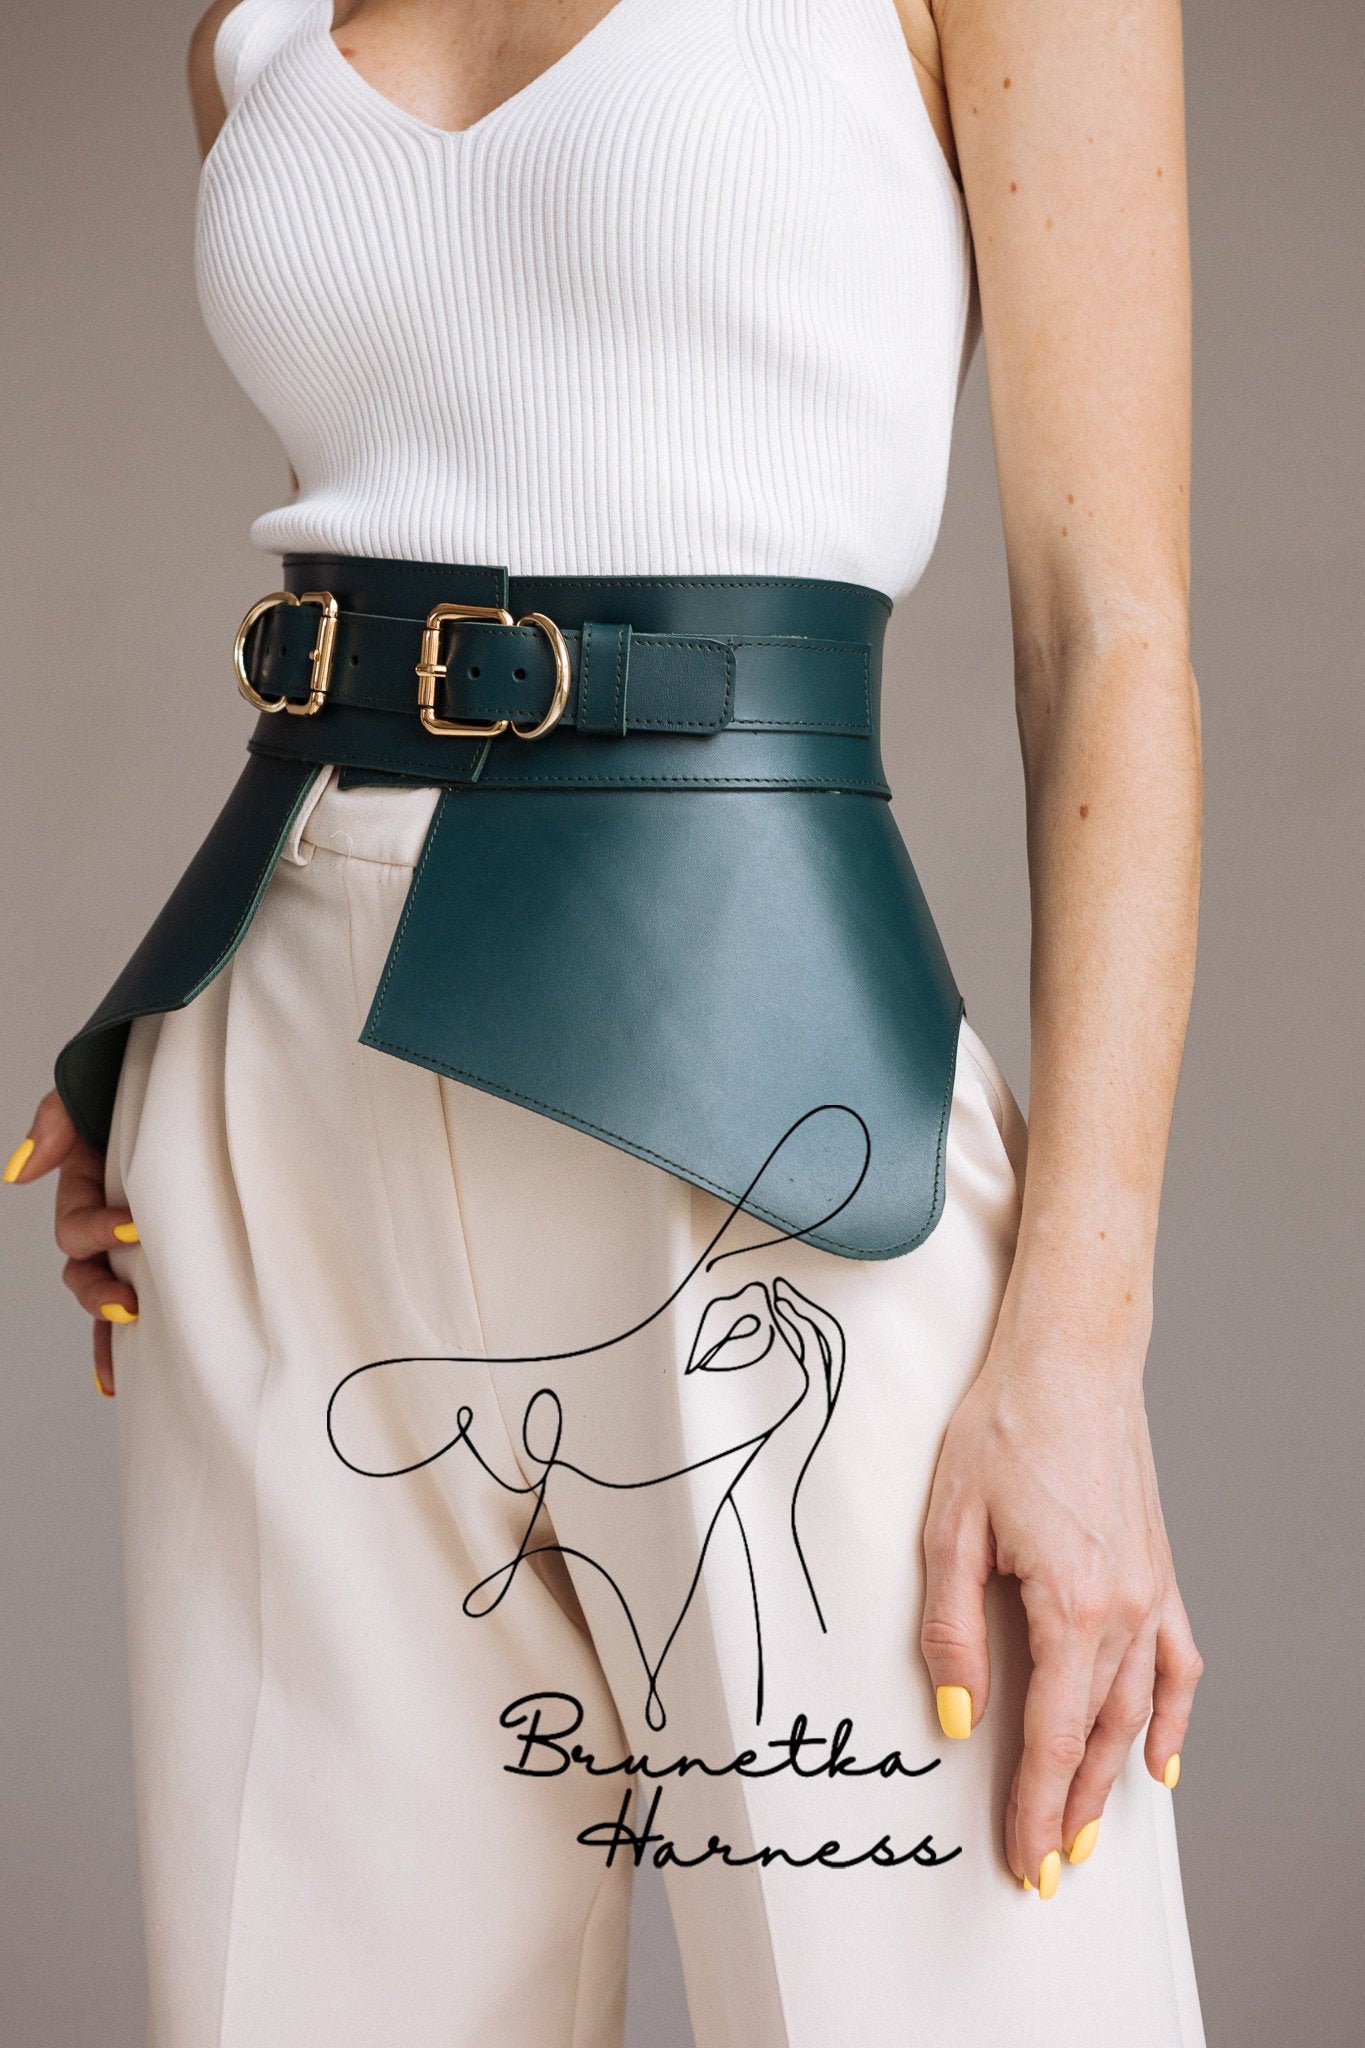 Waist Peplum Belt,leather Peplum Belt,peplum Skirt Belt,harness  Skirt,peplum Belt Harness,corset Belt Skirt,waist Skirt Belt 